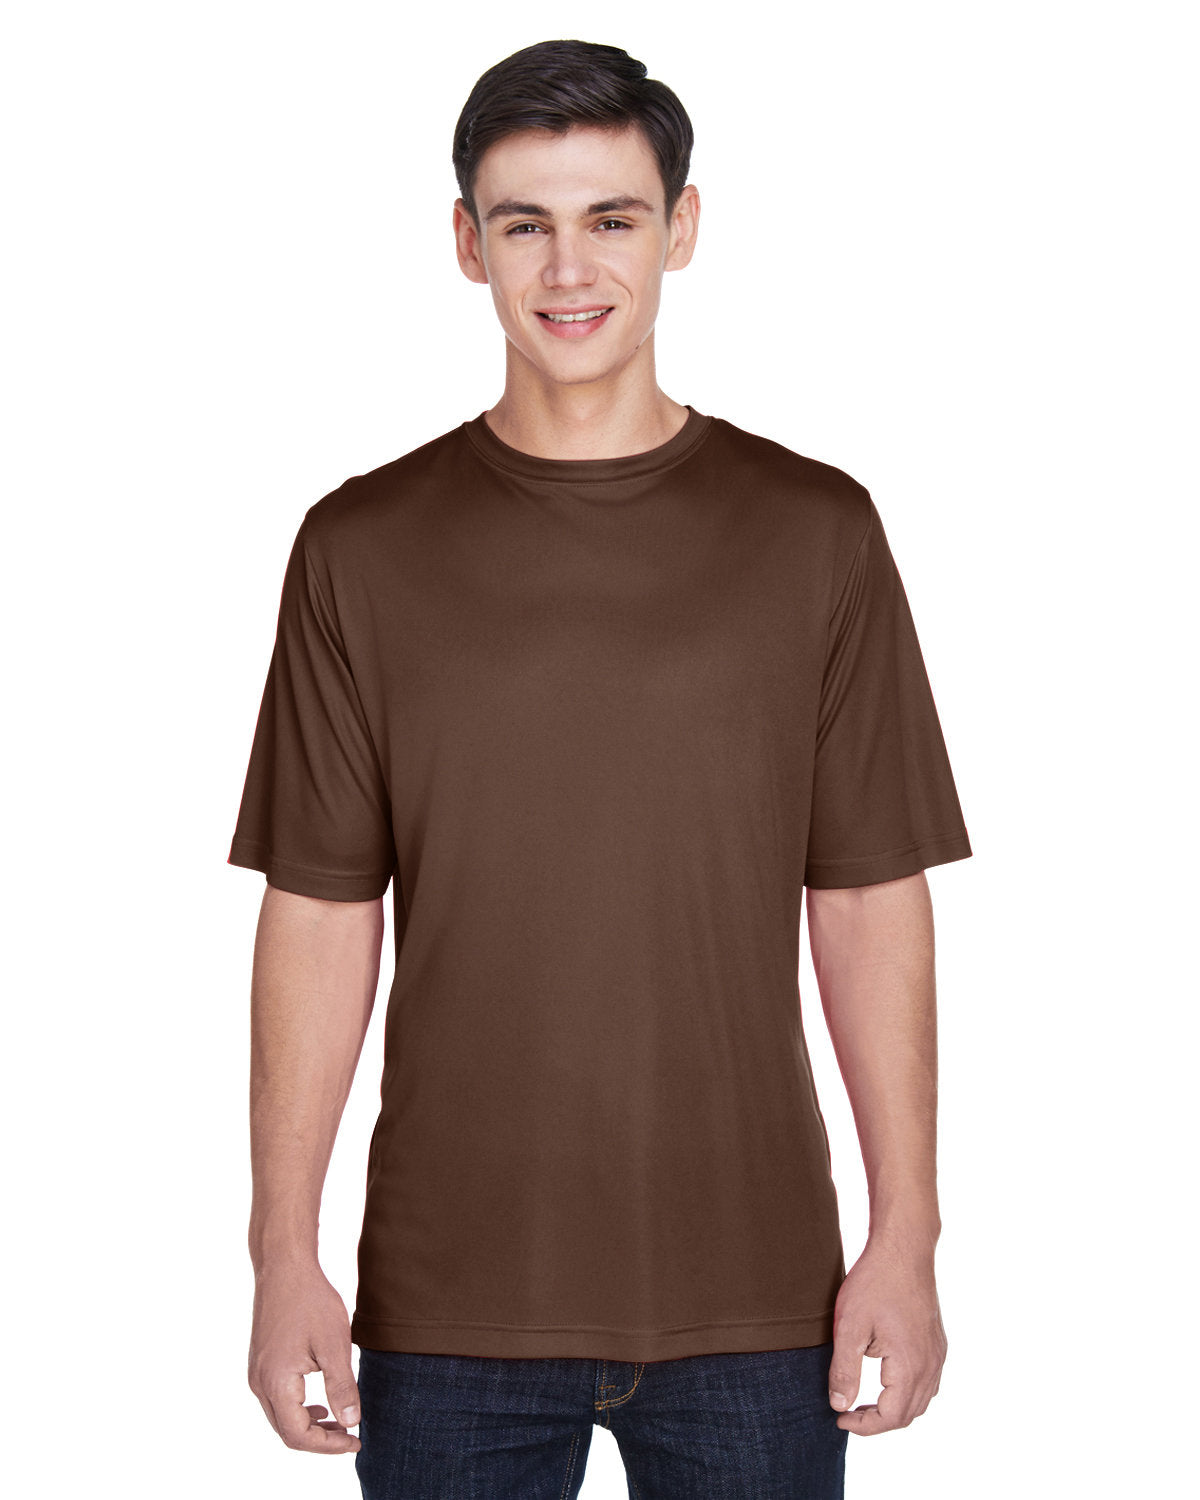 Half Sleeves Crew Neck T-shirt - Coffee